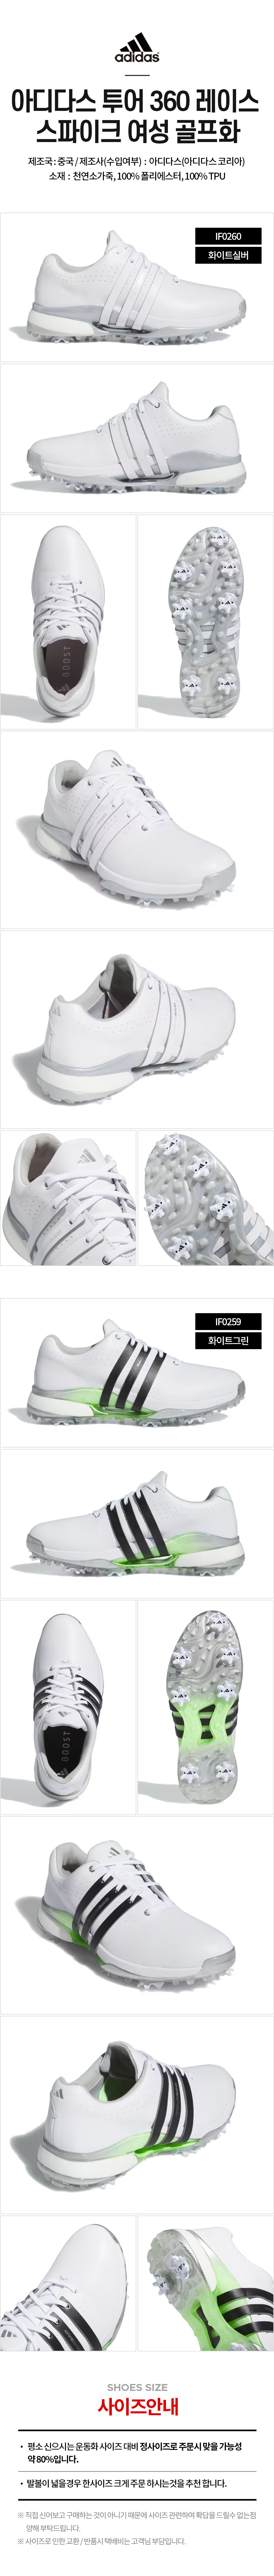 adidas_tour_360_lace_spike_golf_shoes_w_24.jpg